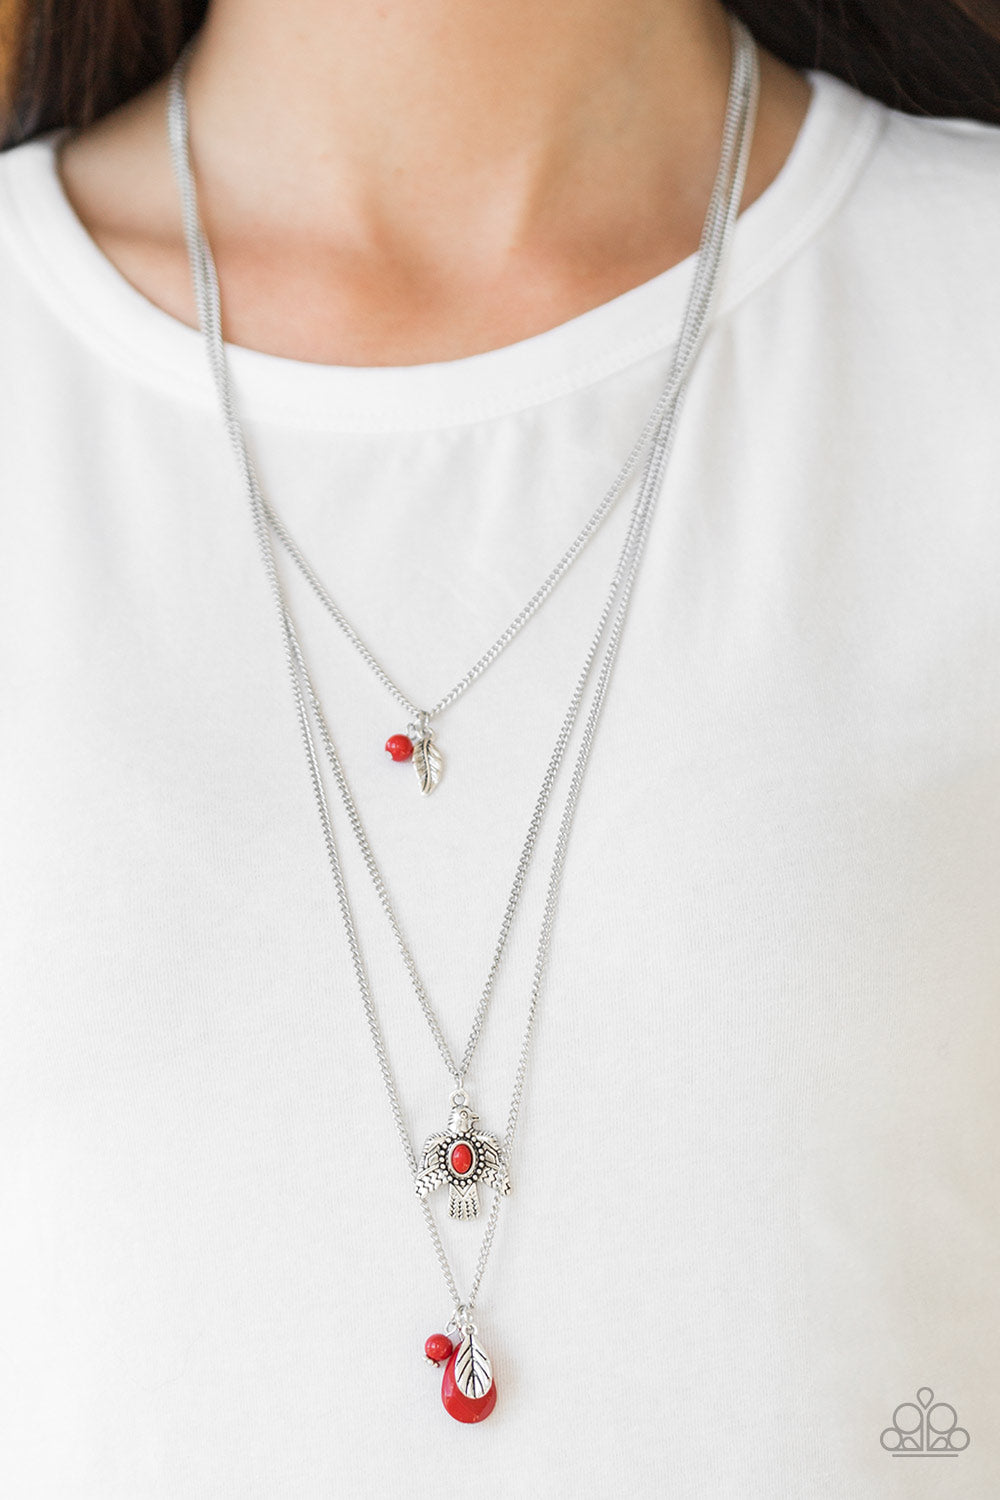 Paparazzi SHOP TIL YOU TEARDROP red necklace | eBay